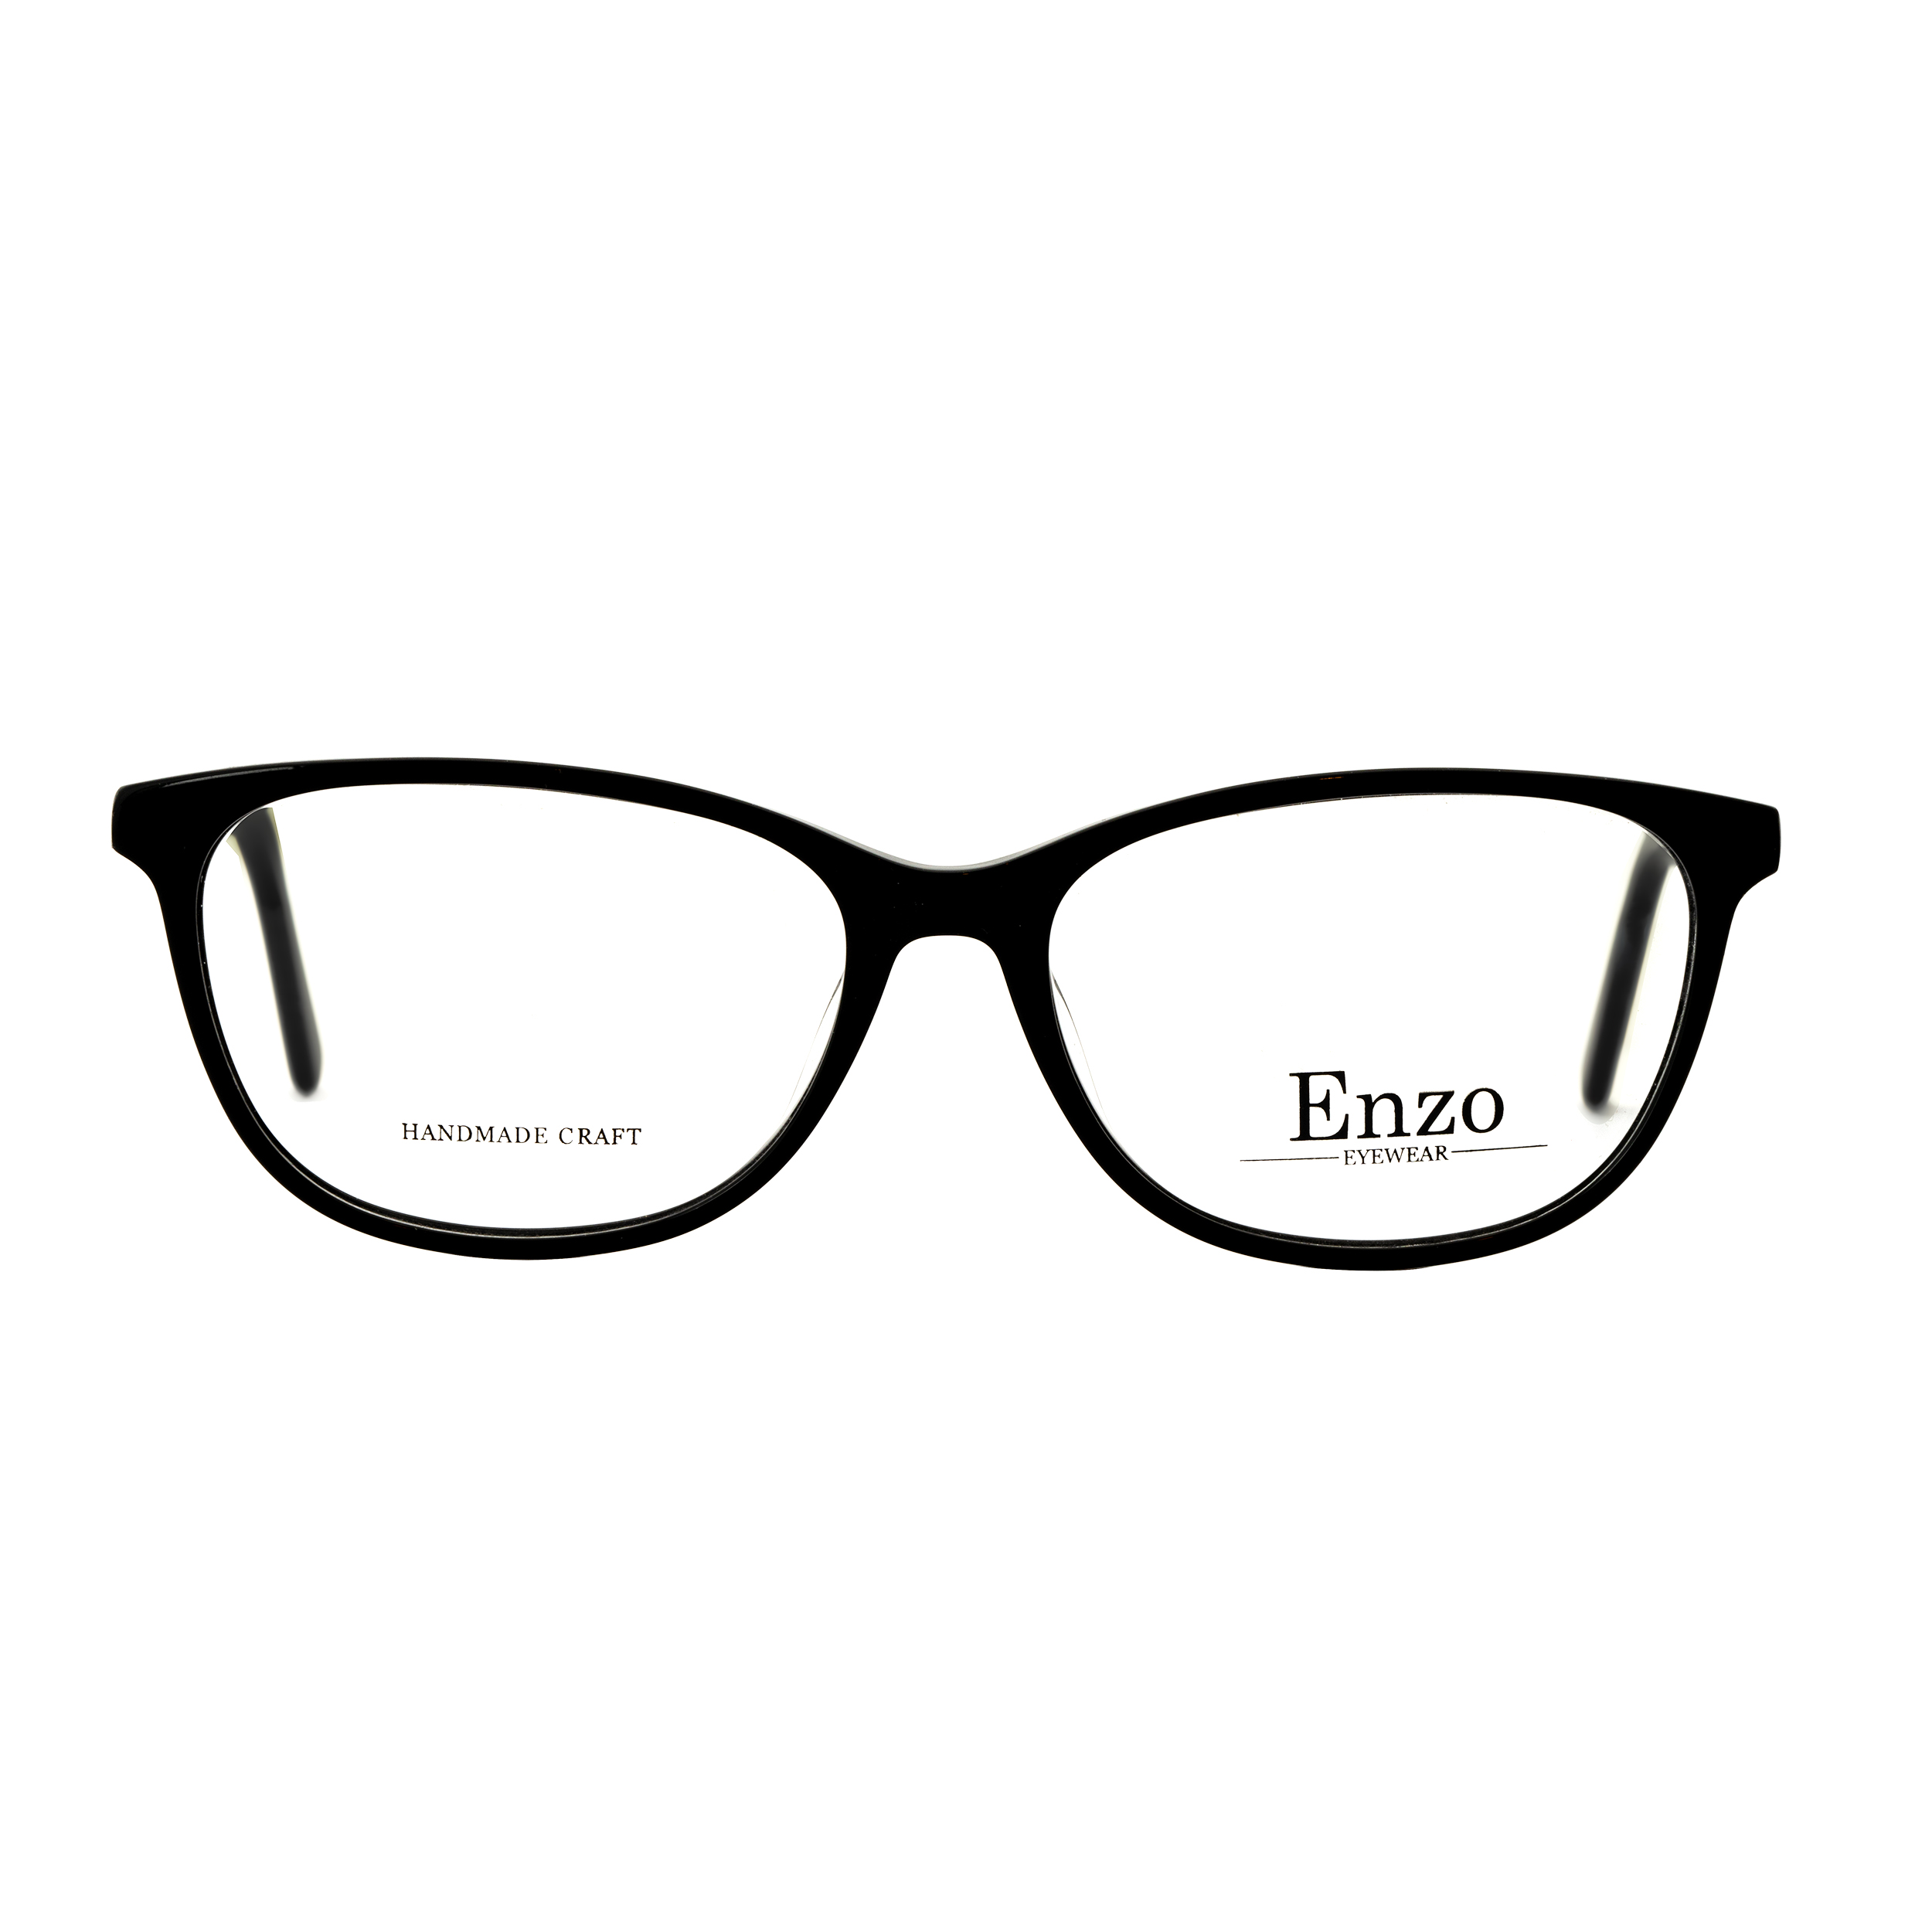  فریم عینک طبی زنانه انزو مدل H5075DT383